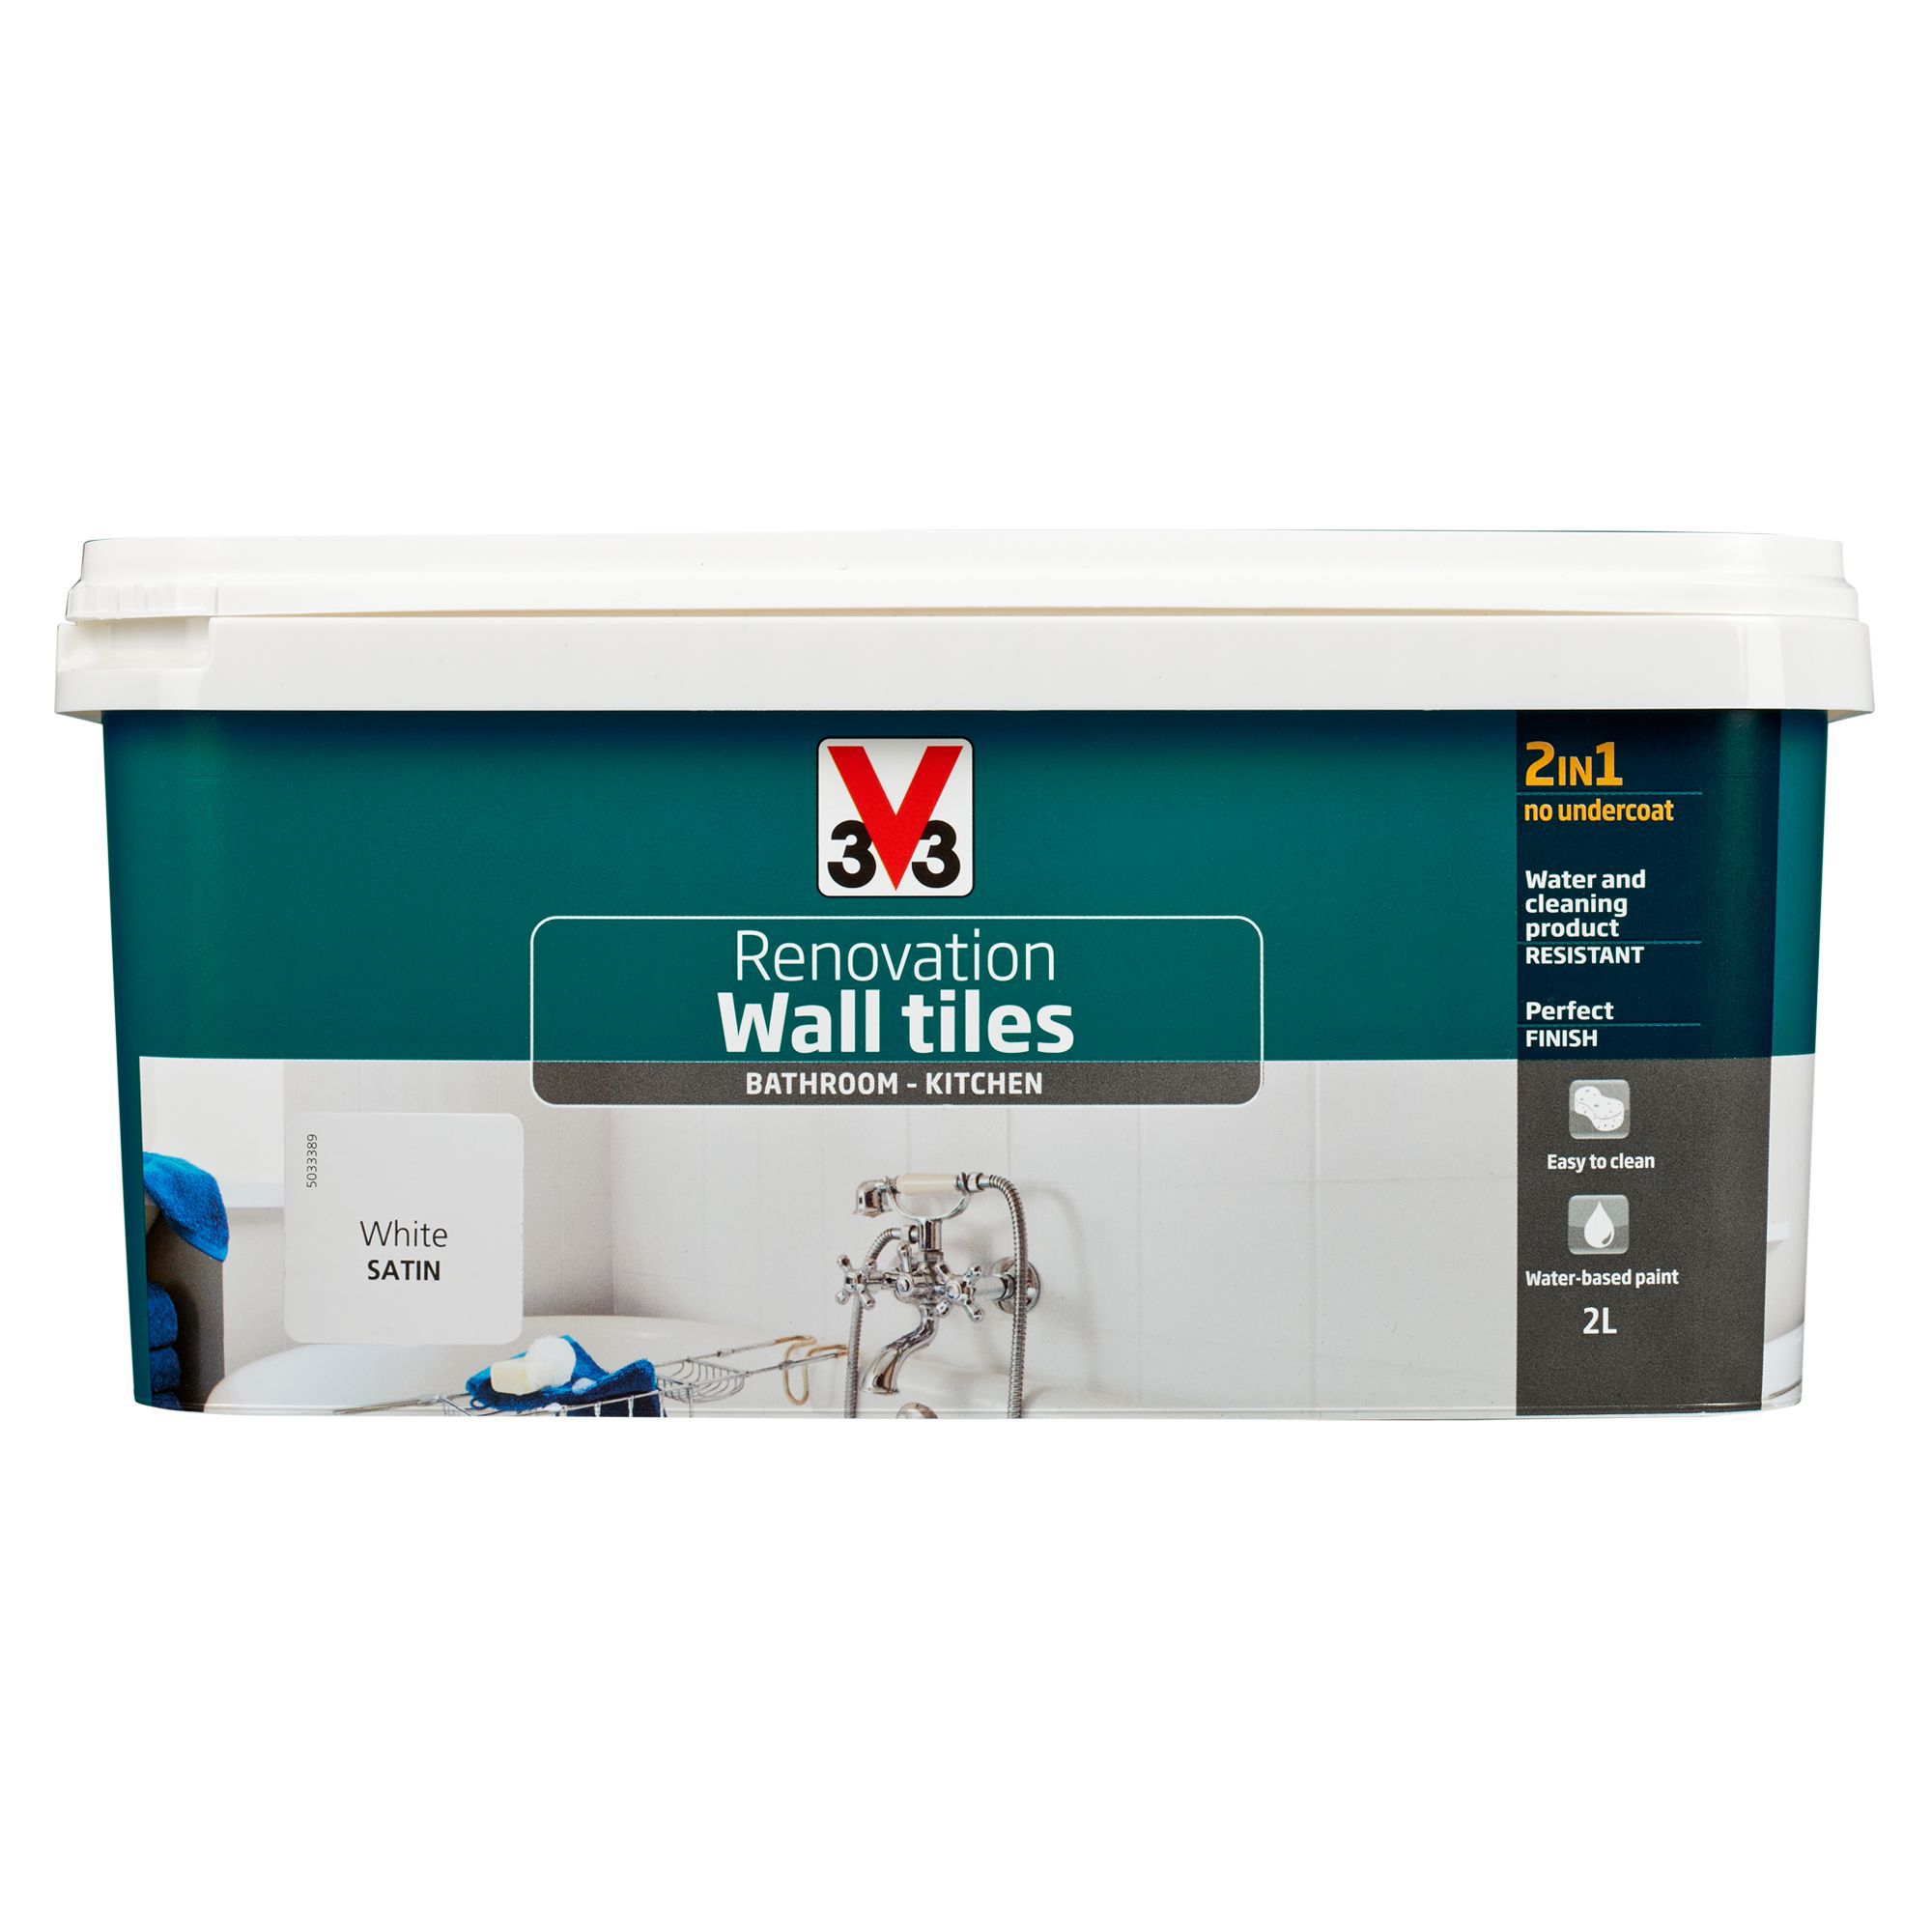 V33 Renovation White Satin Wall tile paint 2L | DIY at B&Q